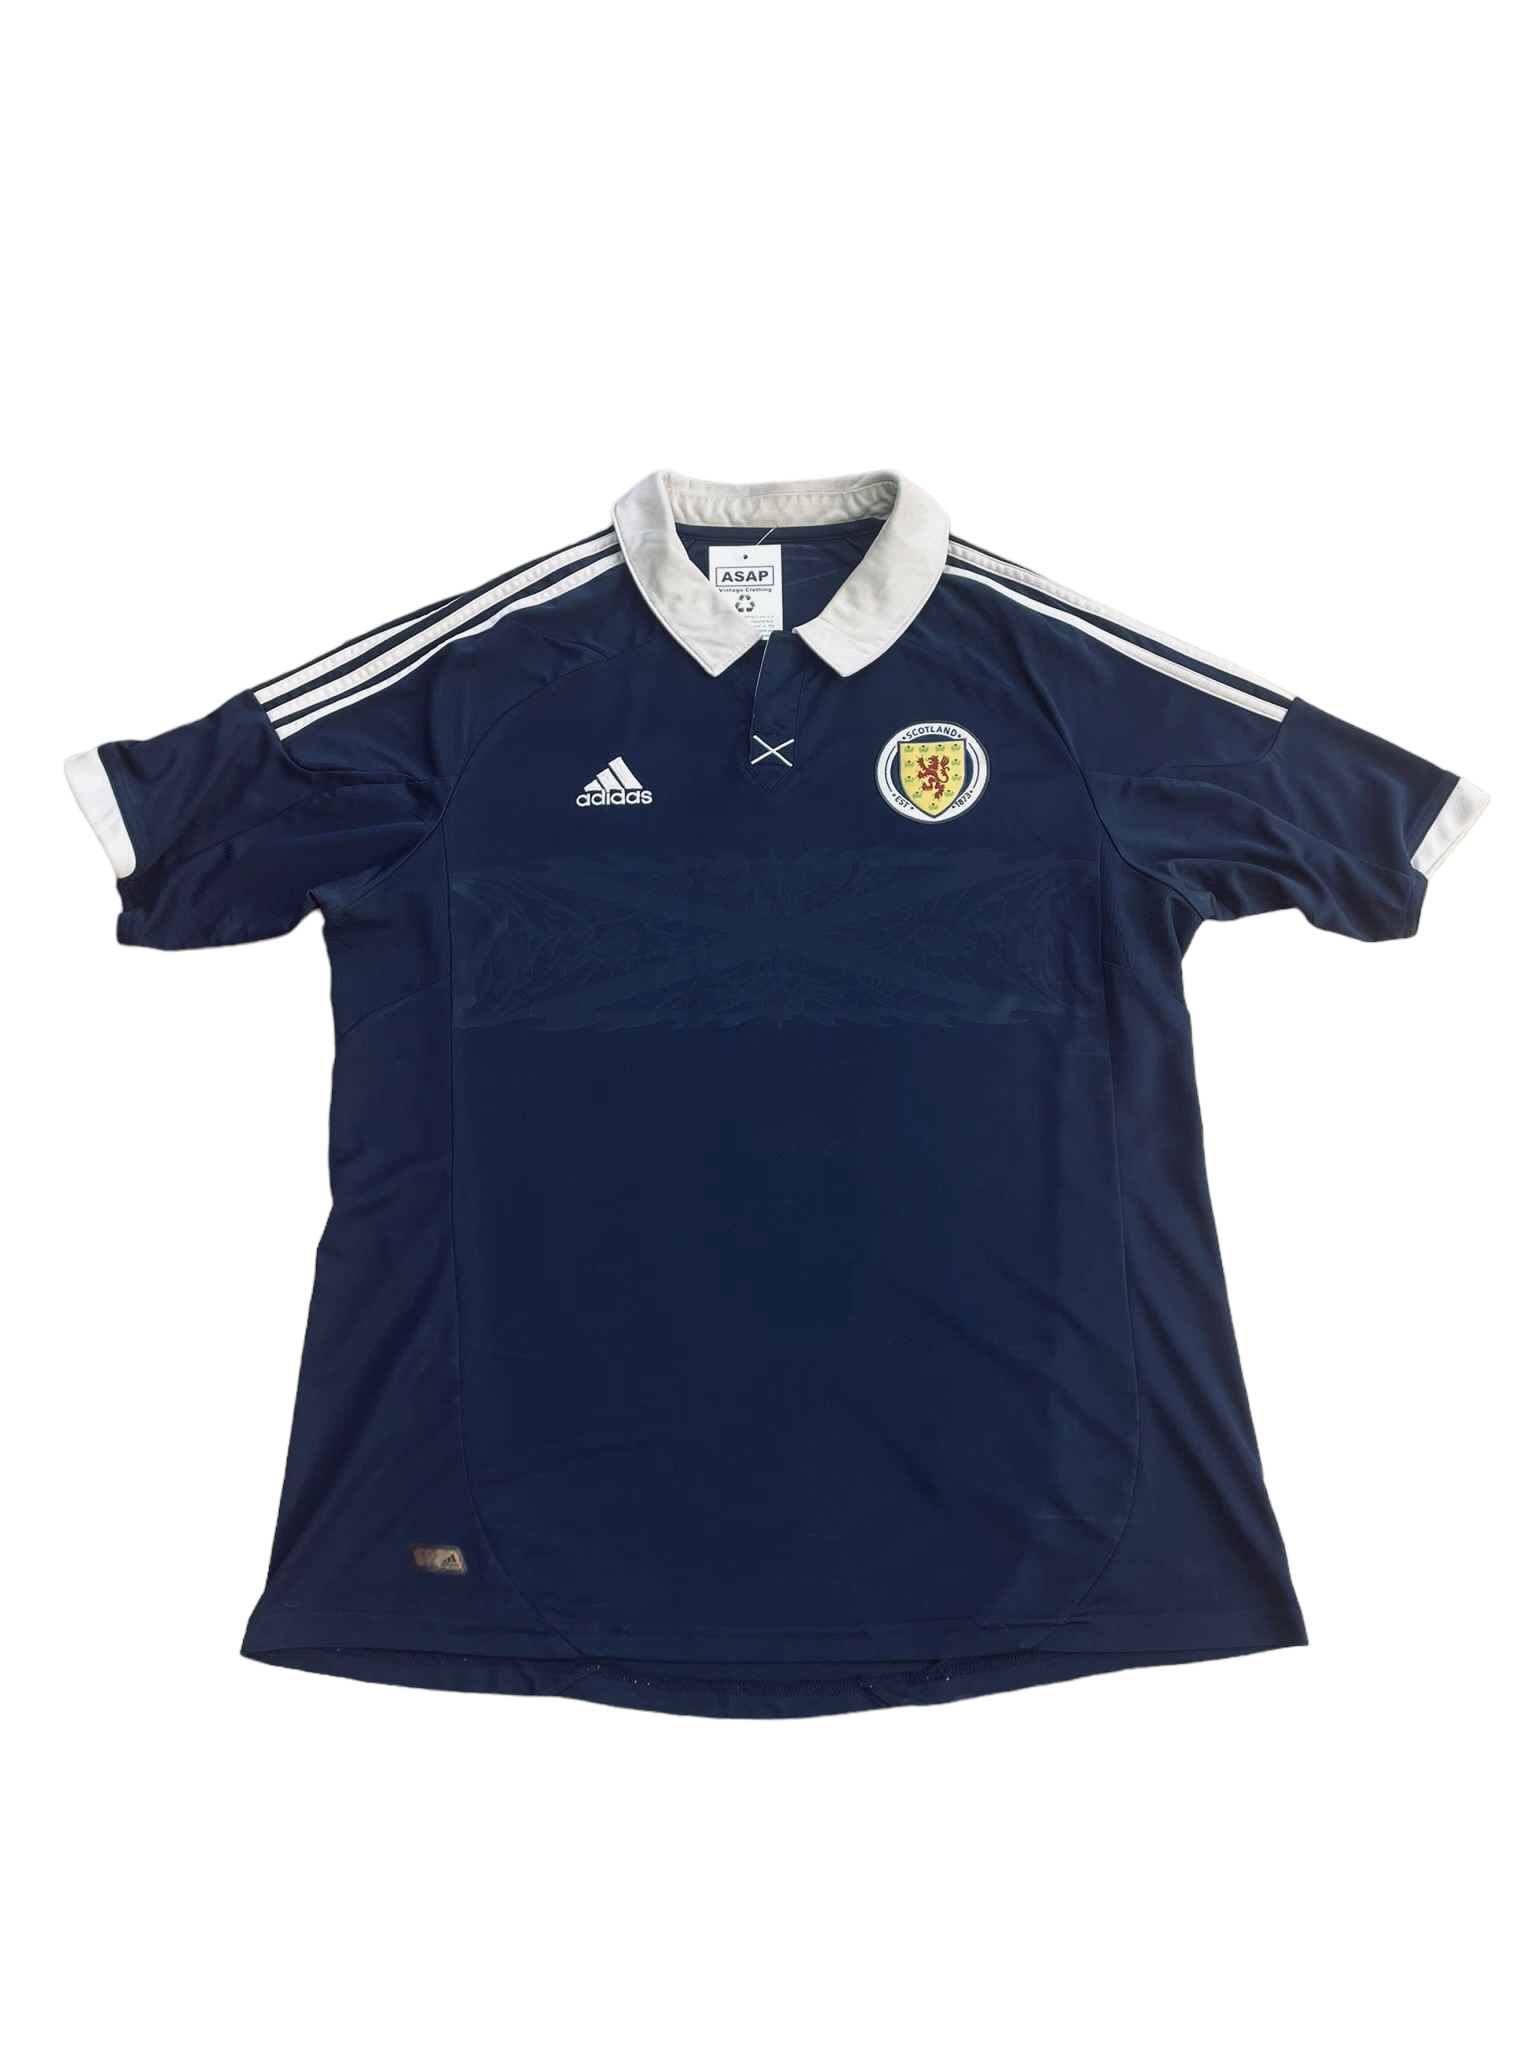 scotland football clothing